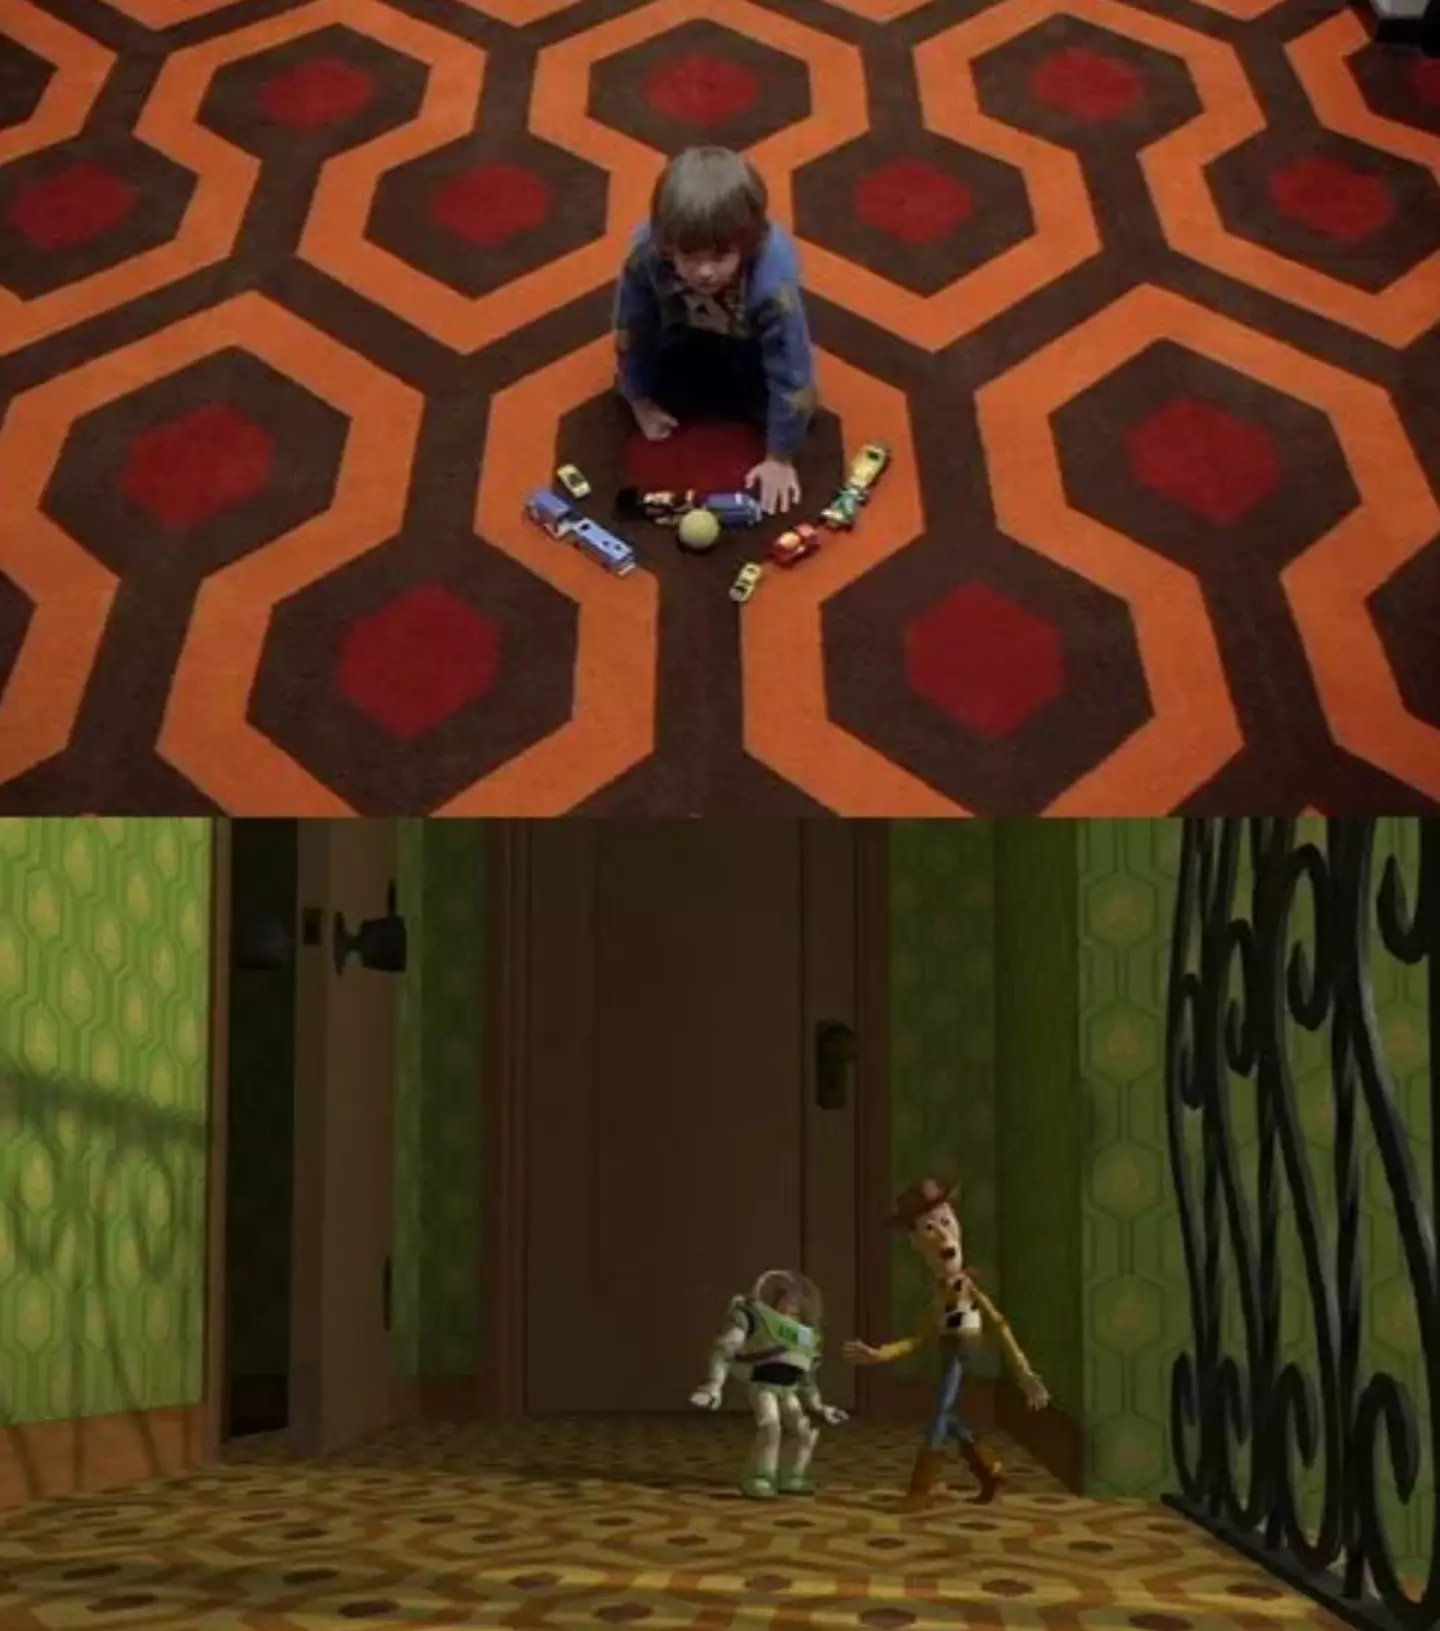 The floors look very similar (